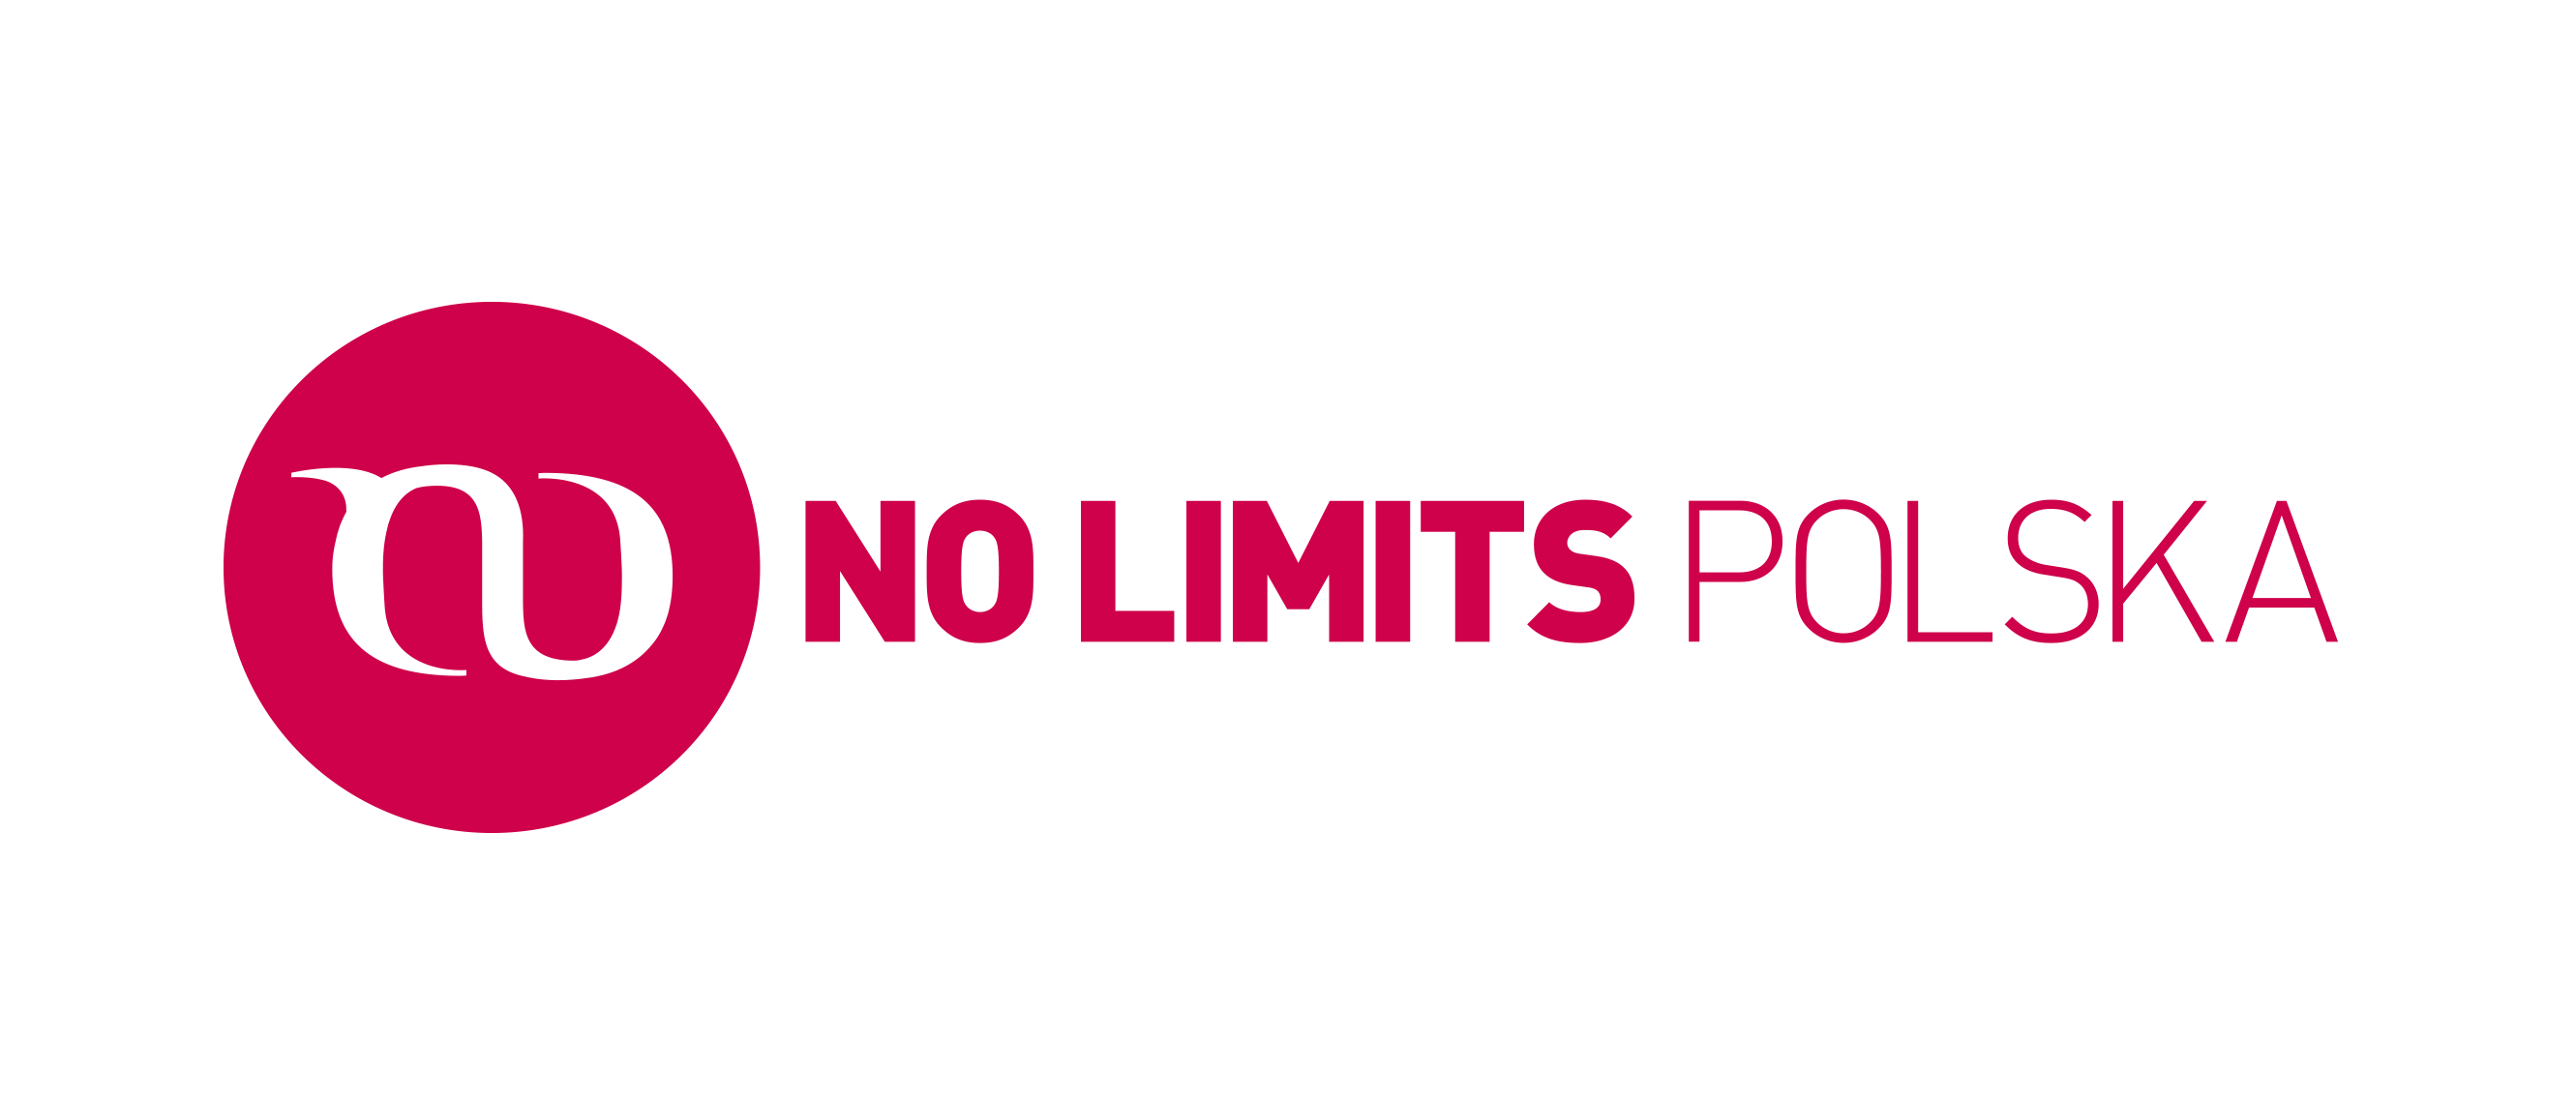 Company logo No Limits Polska